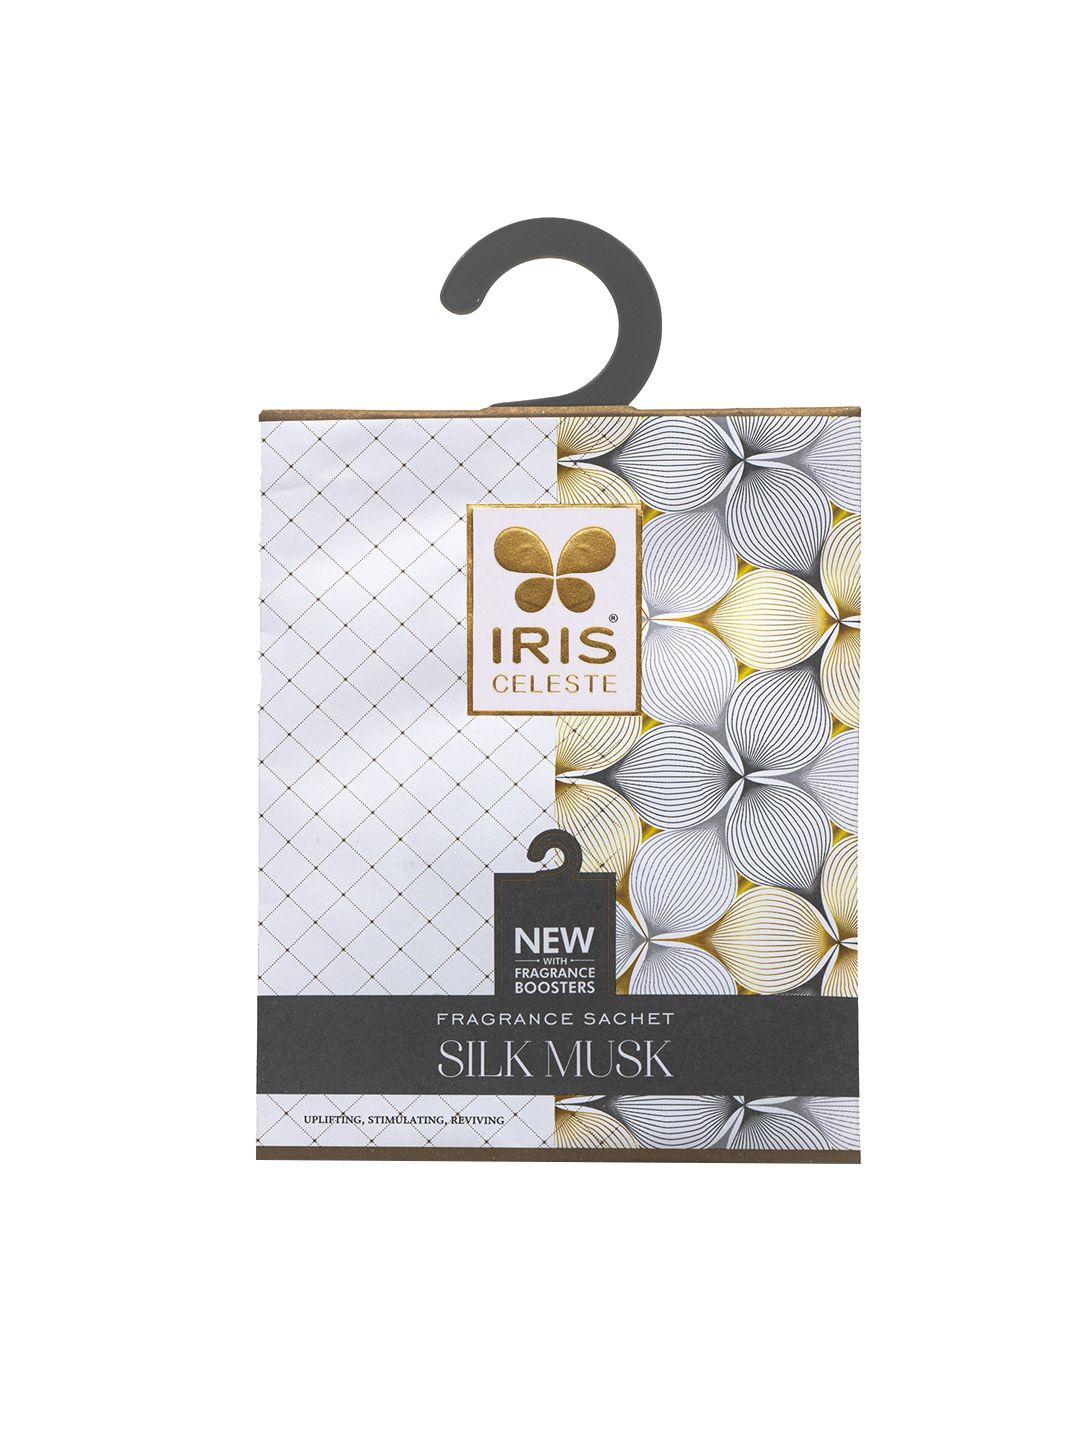 iris-celeste-white-3-pieces-silk-musk-fragrance-sachet-15g